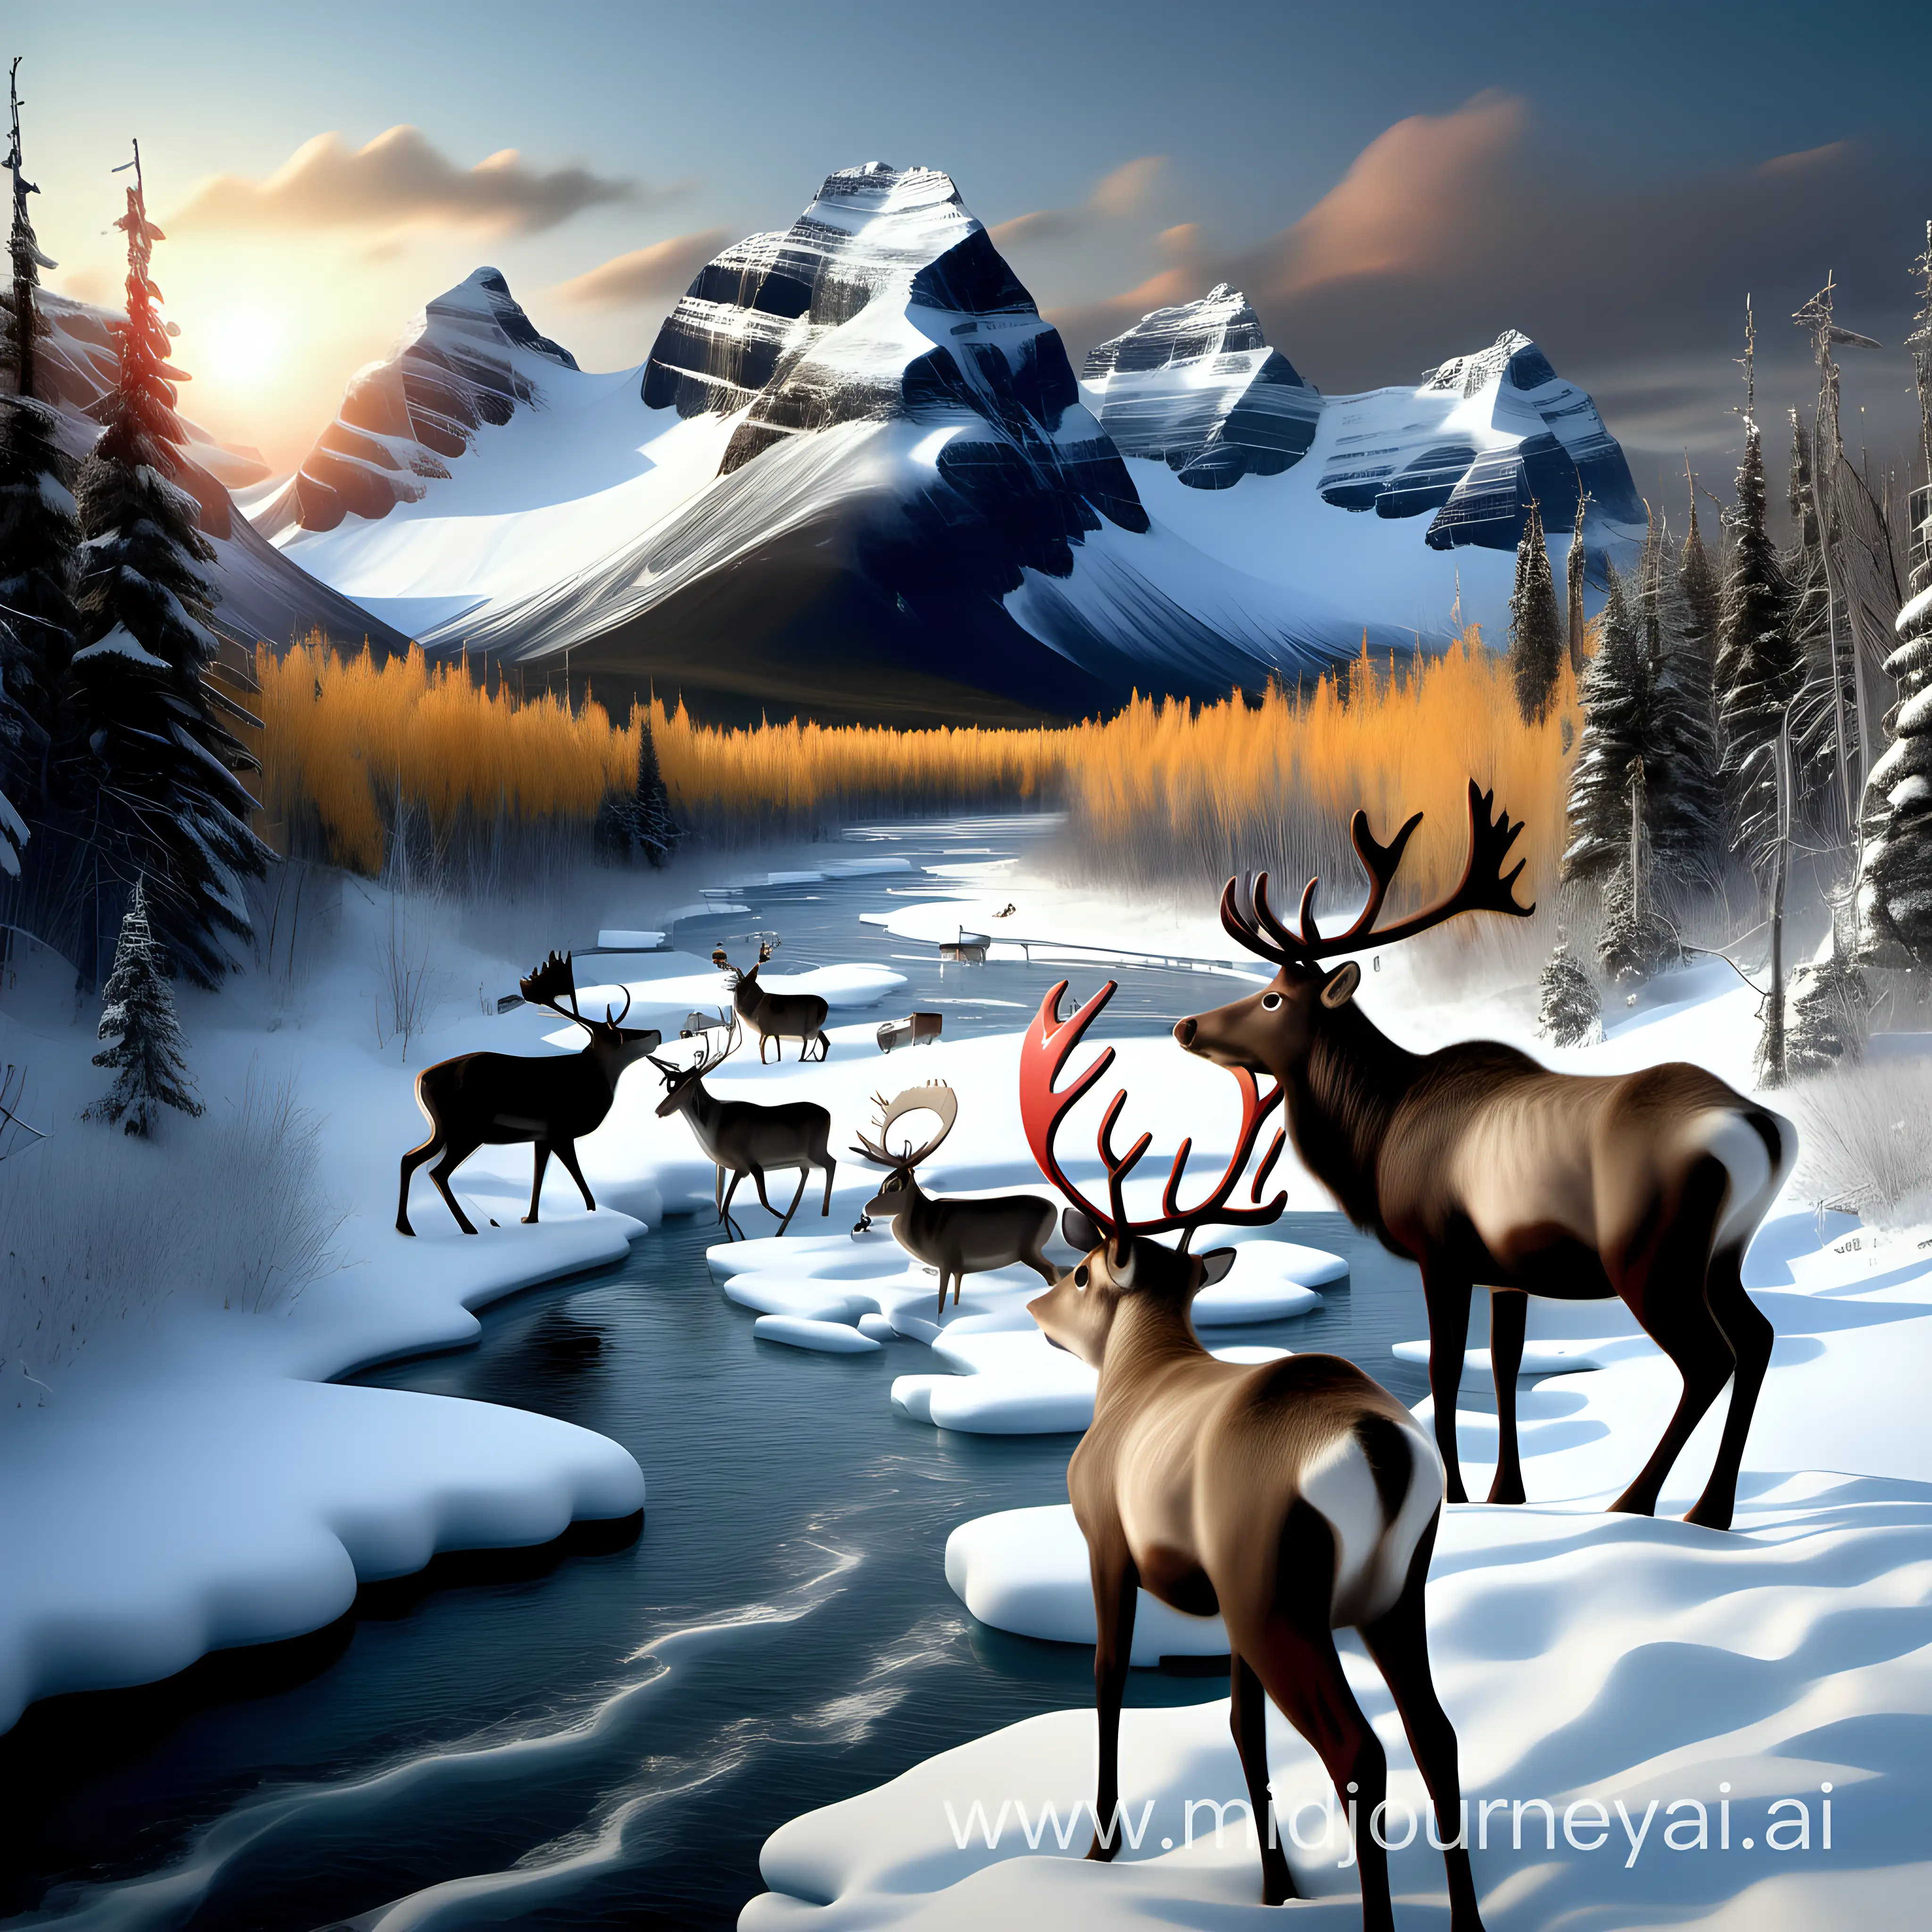 Enchanting Winter Wonderland in Northern Canada with Reindeers